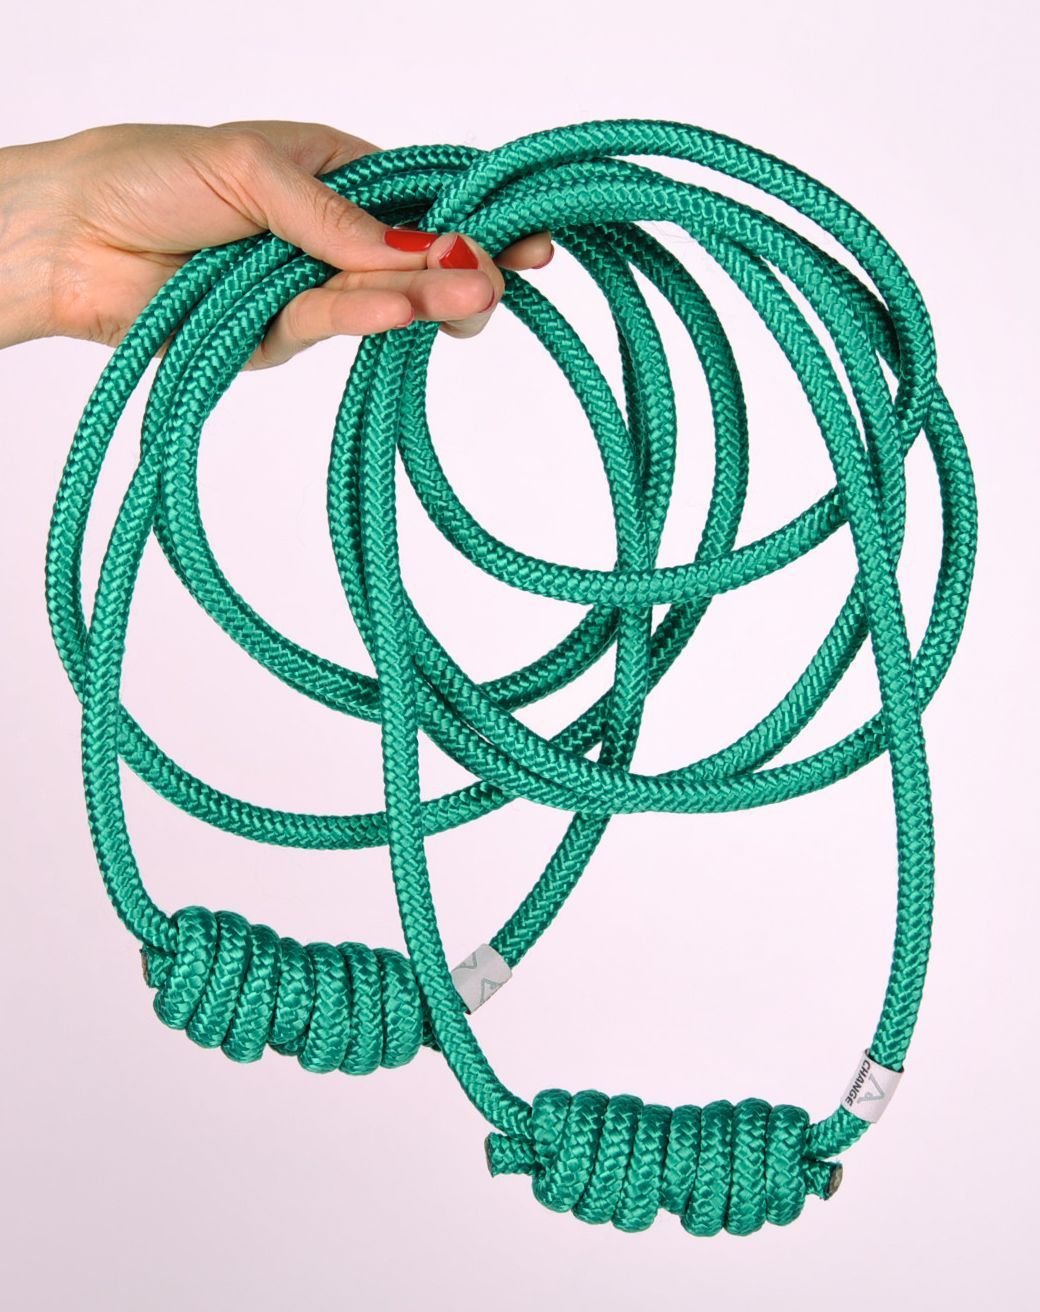 Corde de nylon pour yoga faite main photo 5